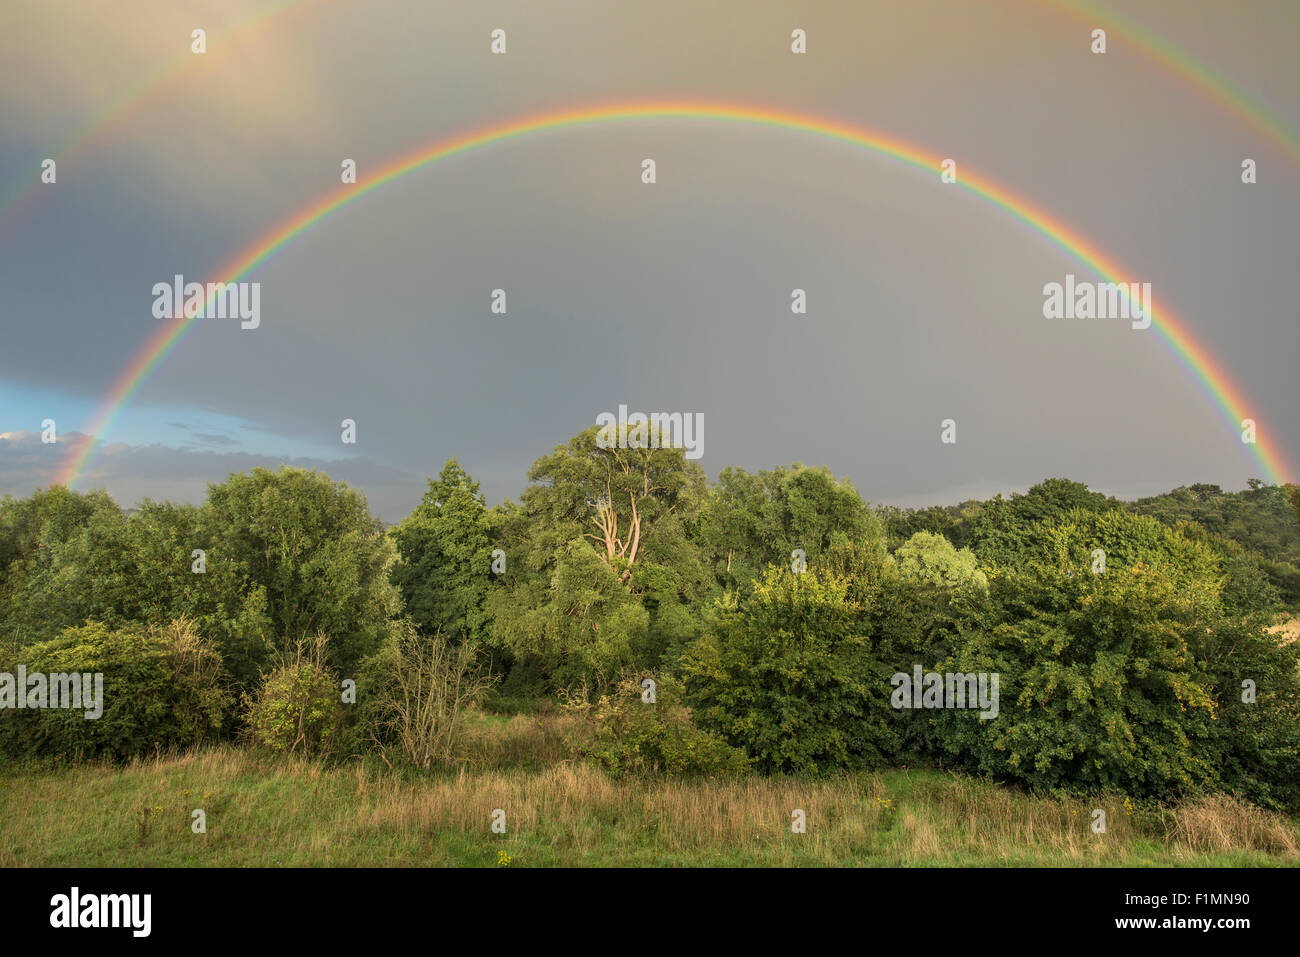 Double rainbow spanning an evening woodland vista Stock Photo